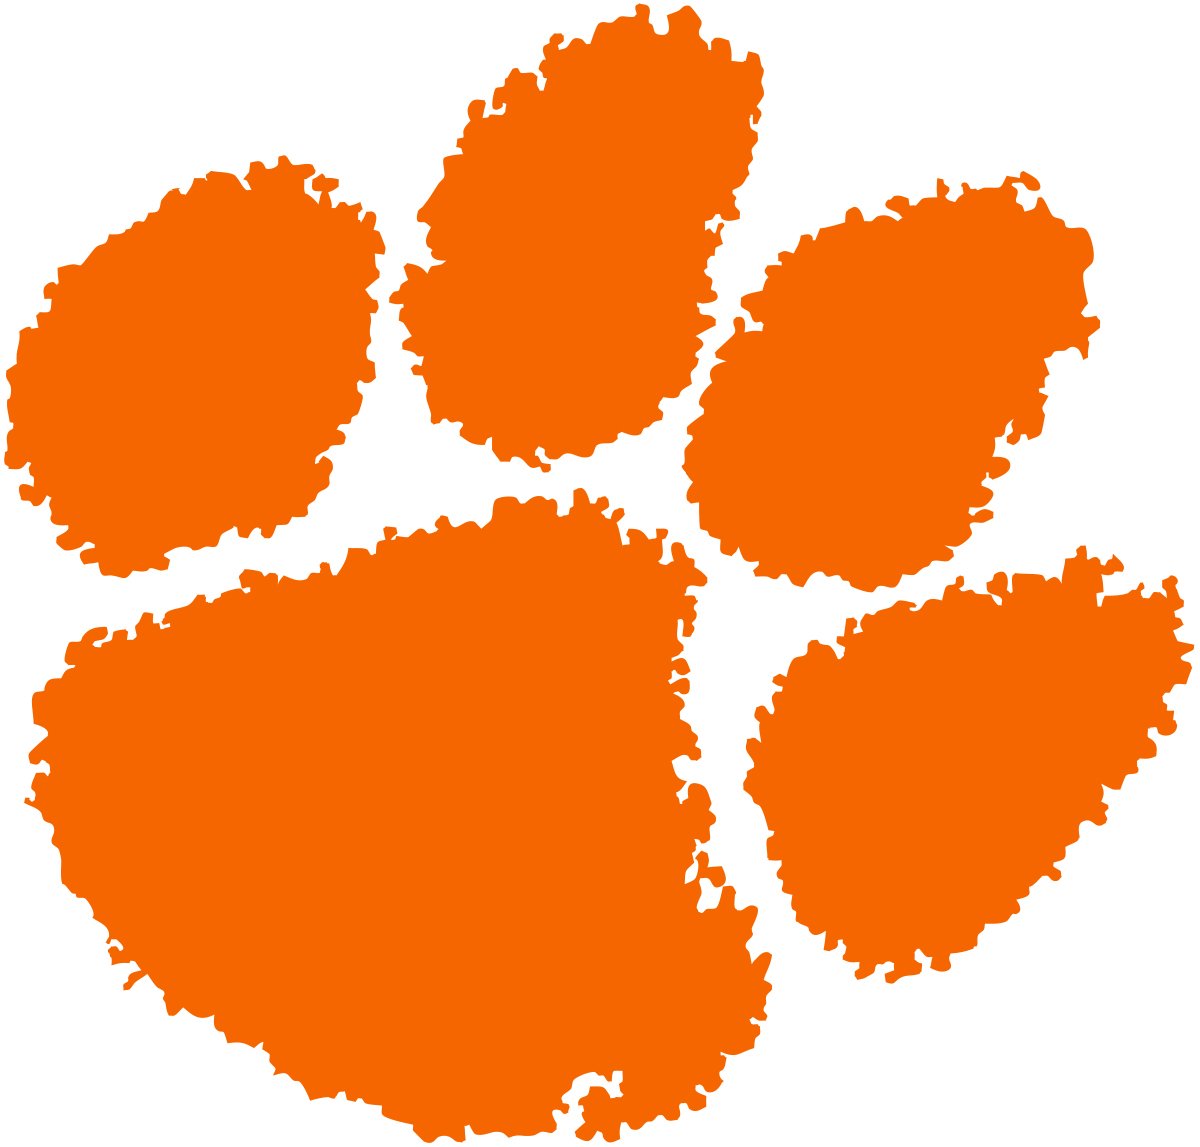 https://teamcolorcodes.com/wp-content/uploads/2015/11/Clemson-Tigers-Logo-JPG.jpg